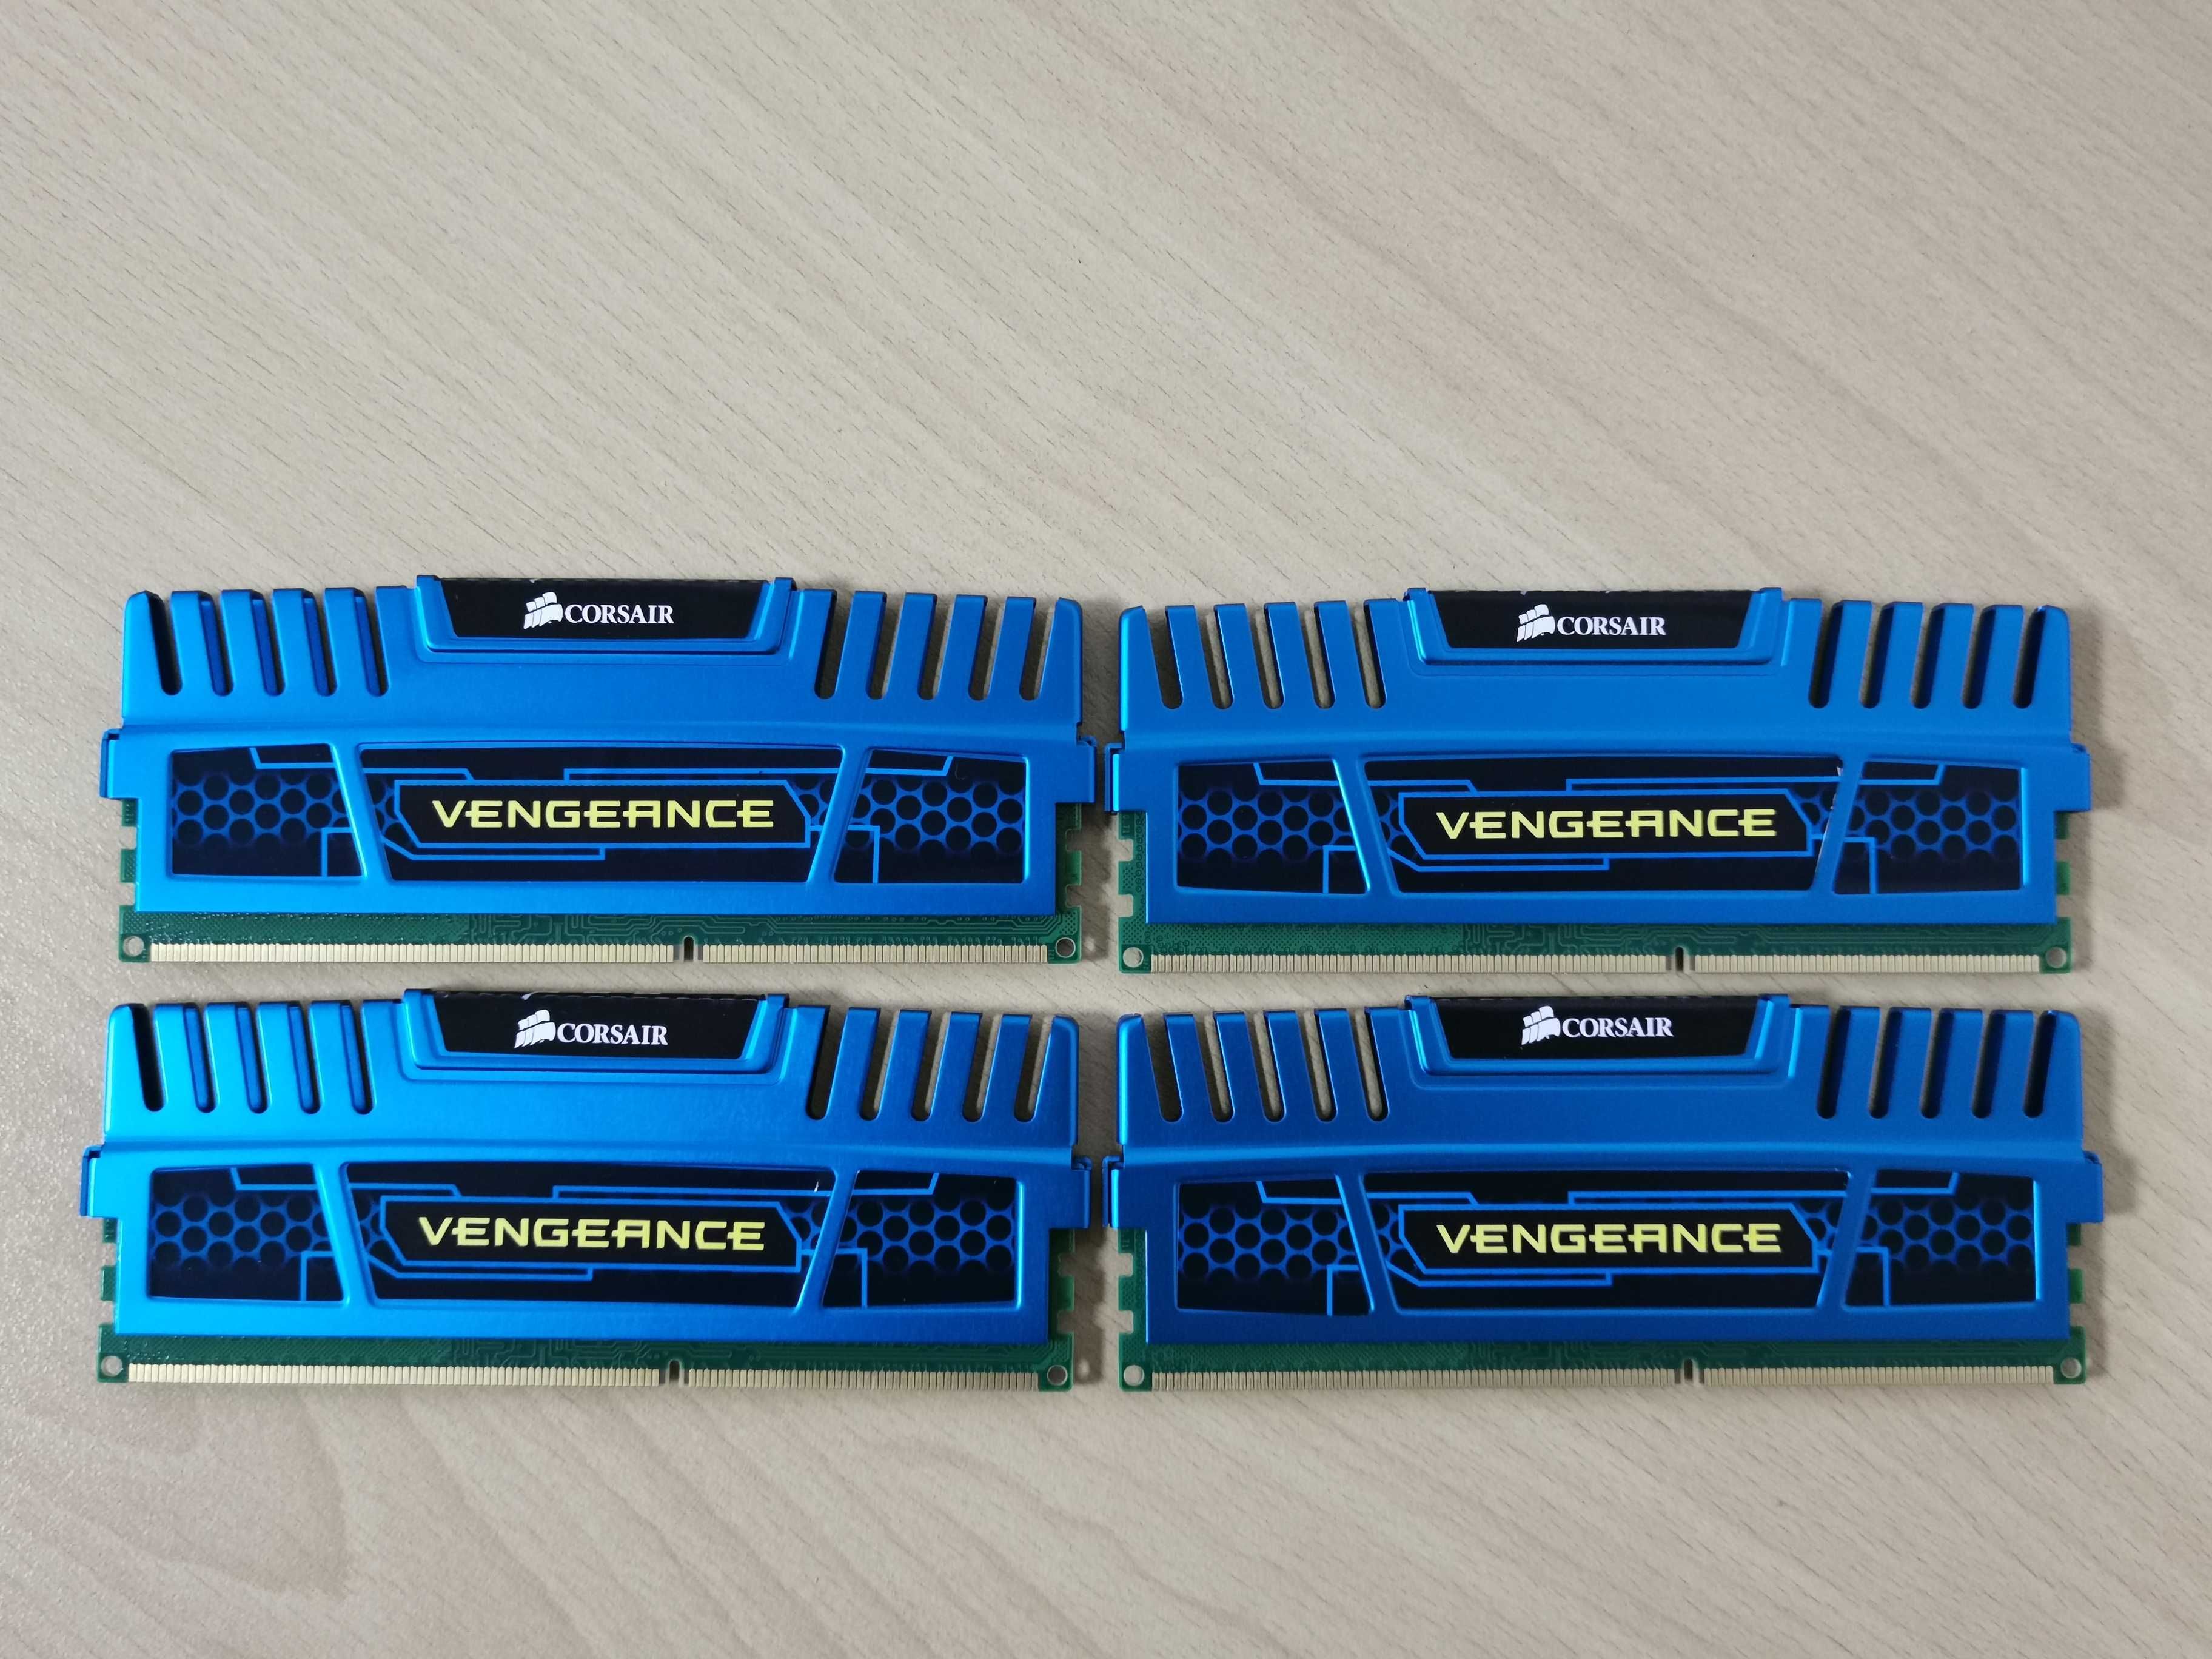 Corsair Vengeance Blue 16GB kit (4x 4GB) DDR3 RAM